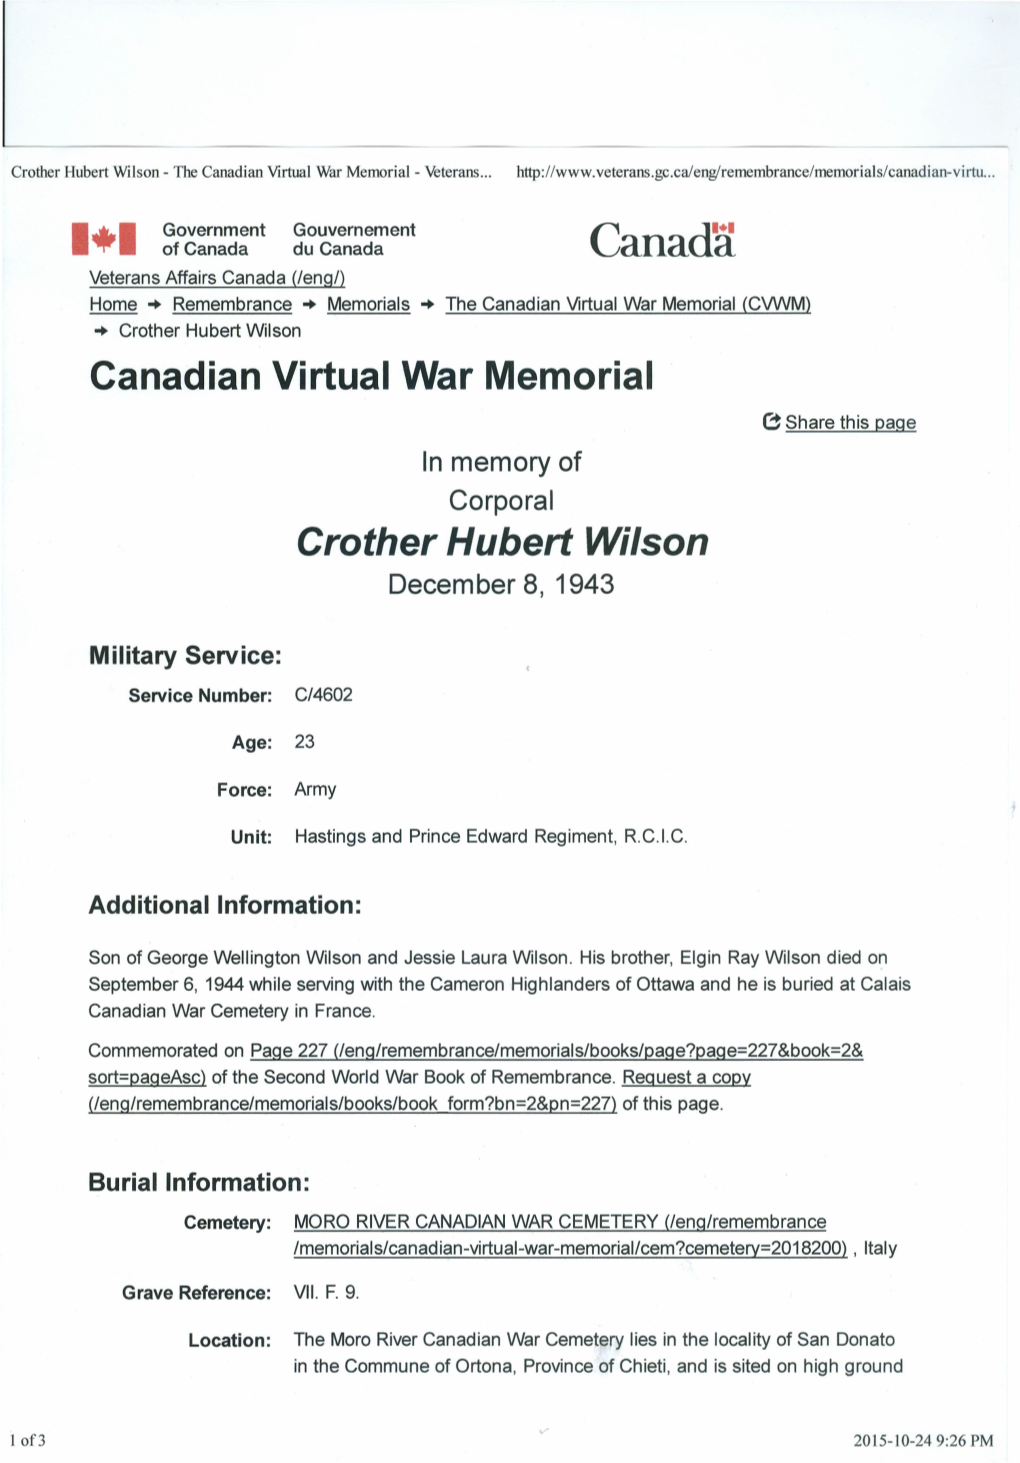 Crother Hubert Wilson - the Canadian Virtual War Memorial - Veterans